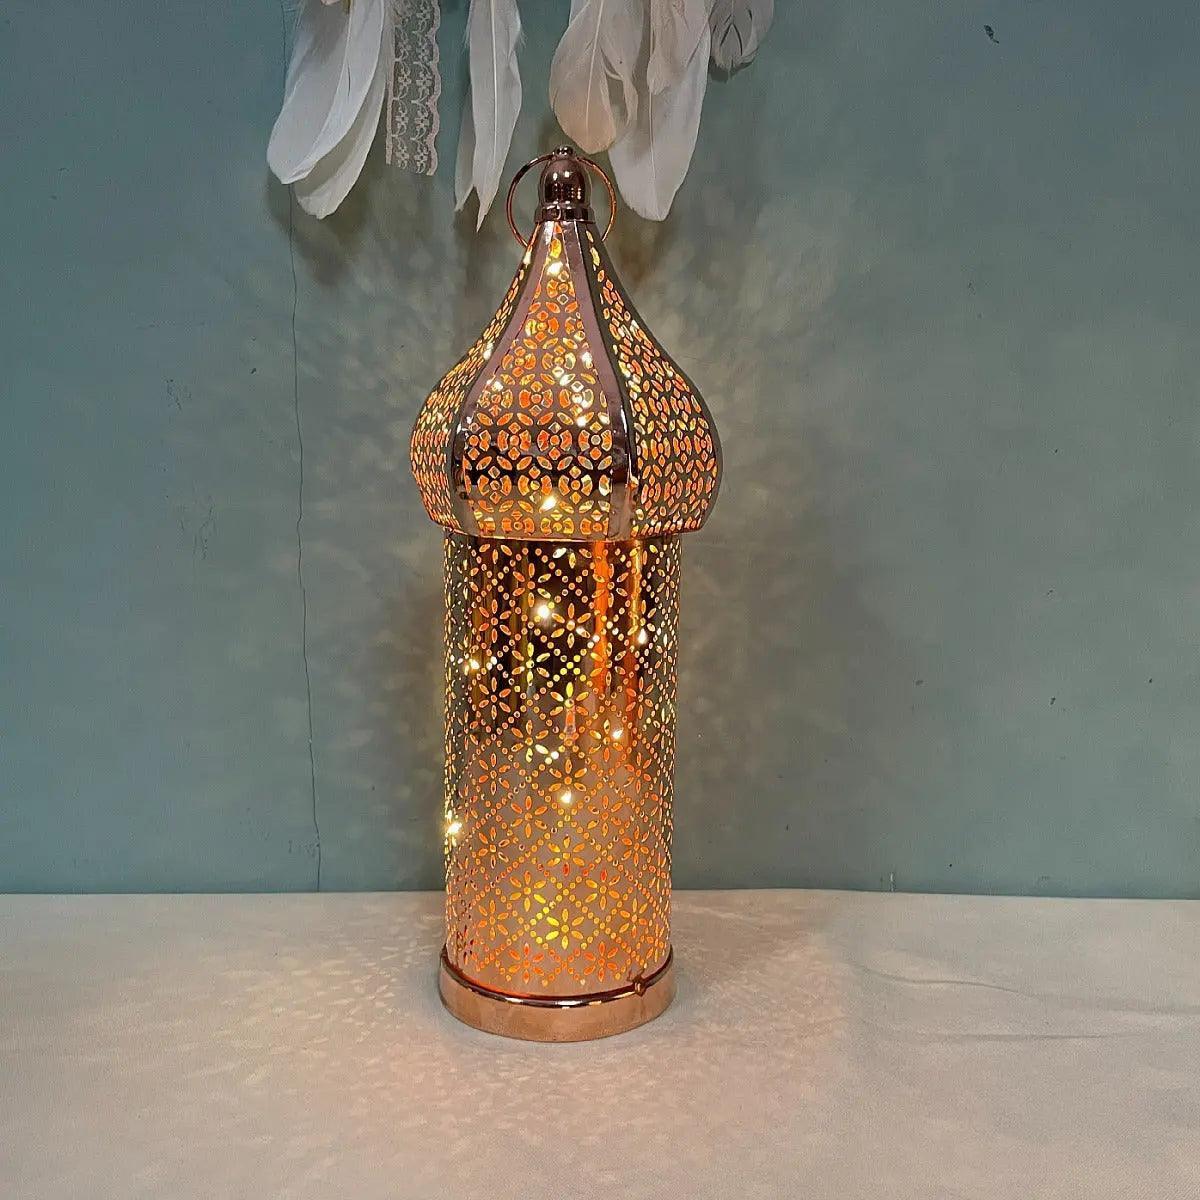 MR028 Ramadan Iron Led Wind Lamp - Mariam's Collection